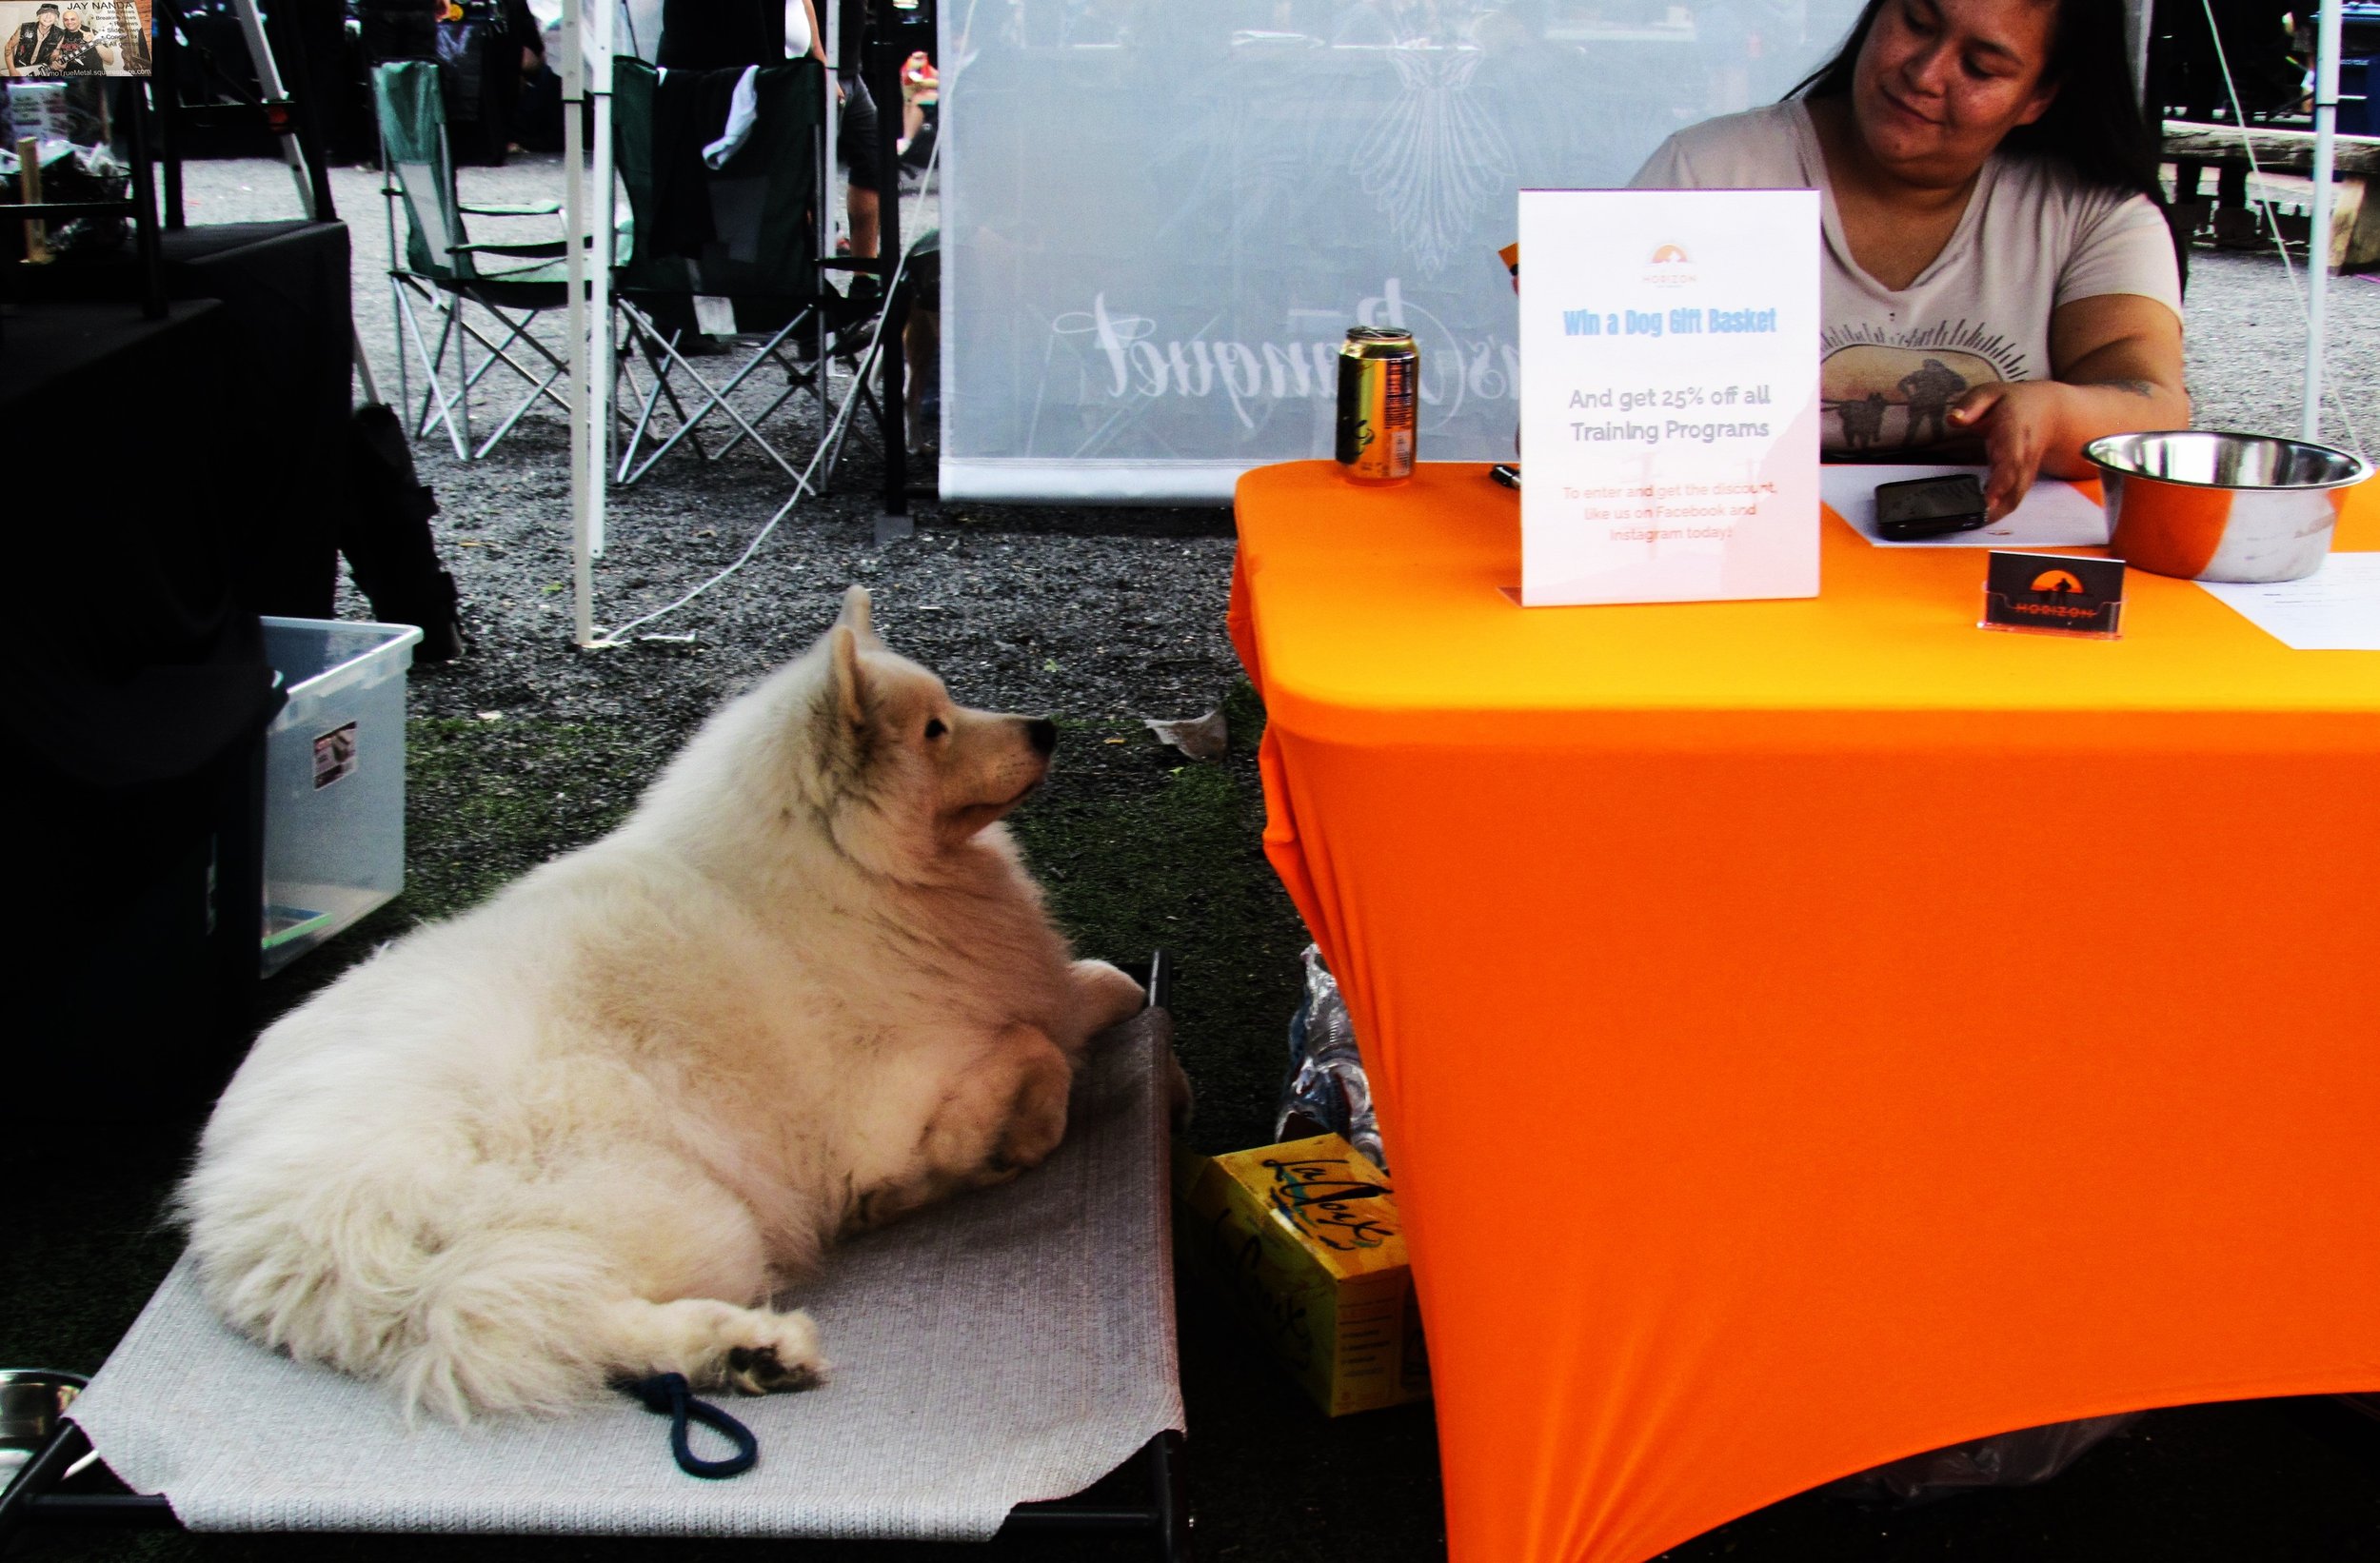  Horizon Dog Training was one of nearly 30 vendors on hand. 